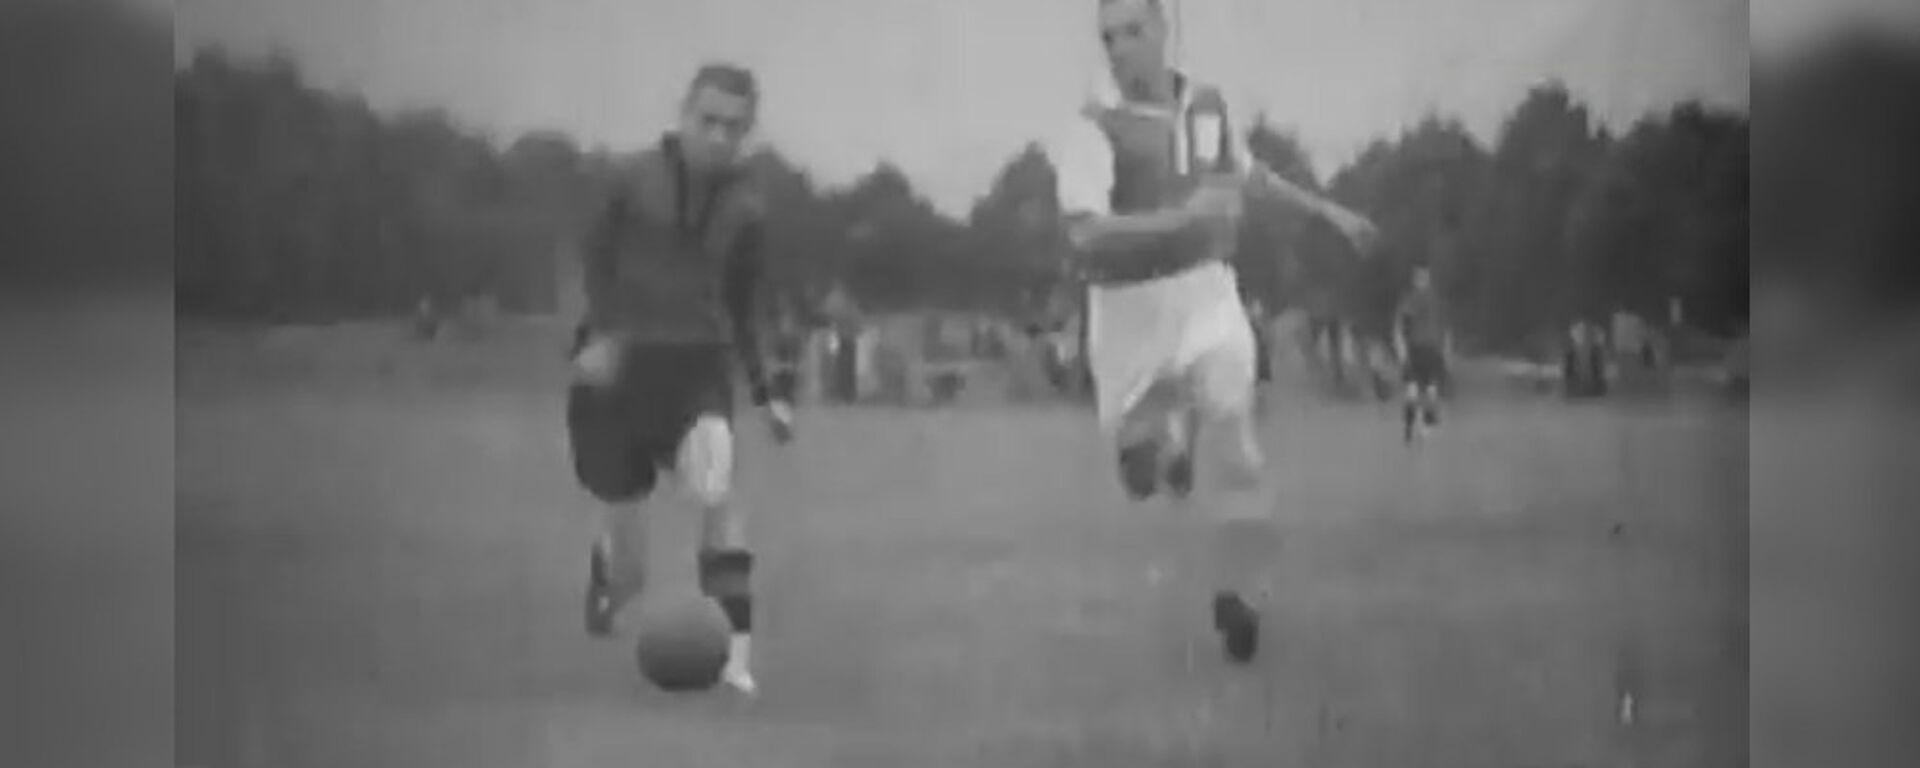 Кубок Балтии по футболу, 1940 - Sputnik Латвия, 1920, 18.10.2017